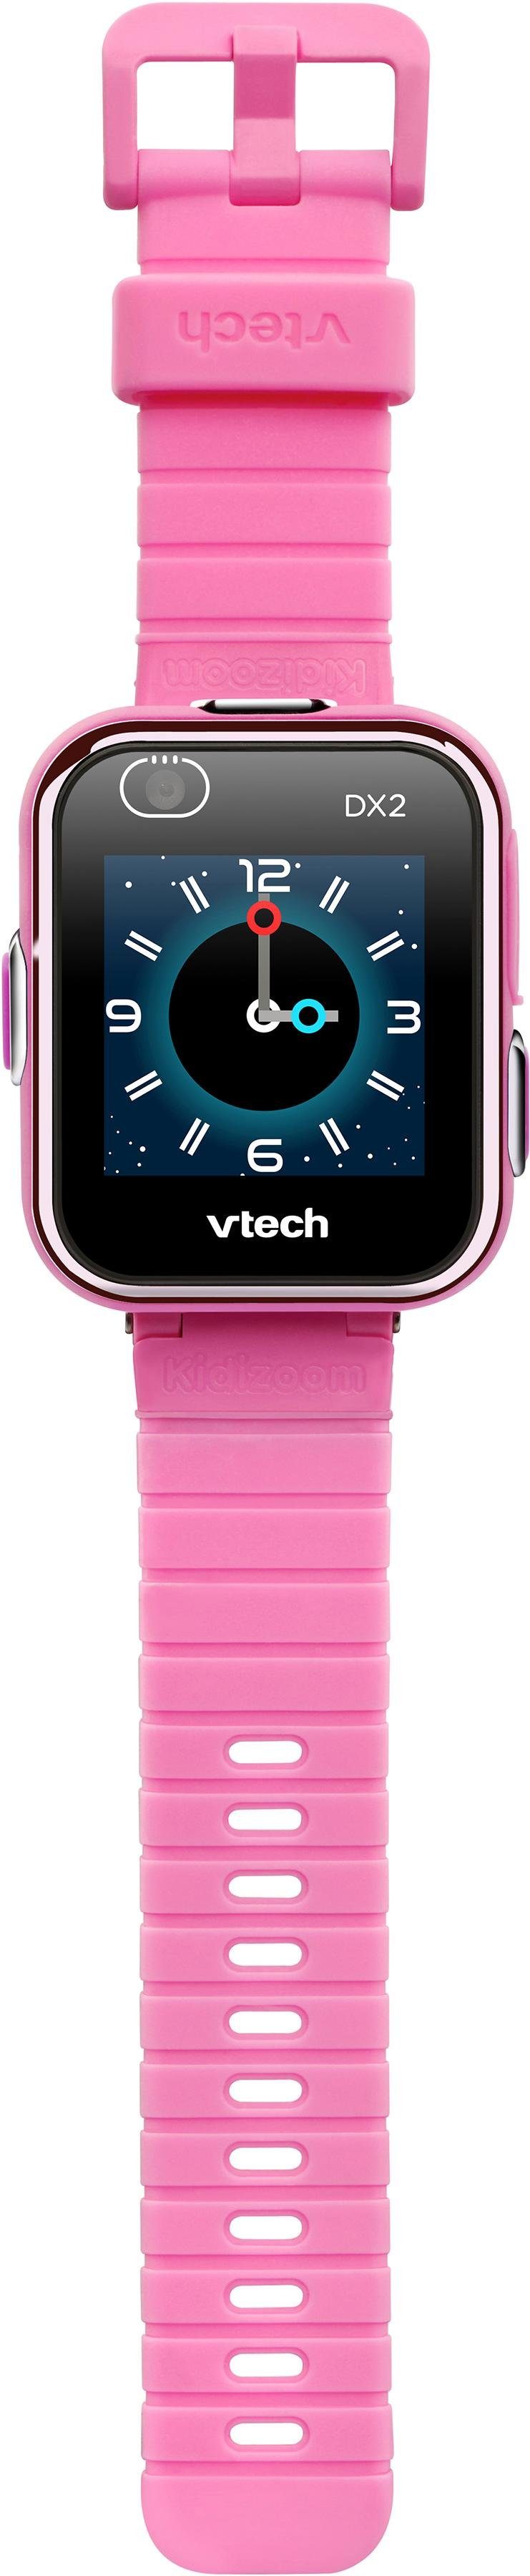 Vtech® Lernspielzeug KidiZoom Smart Watch DX2, mit Kamerafunktion,  Multifunktionale Smart Watch »KidiZoom Smart Watch DX2«